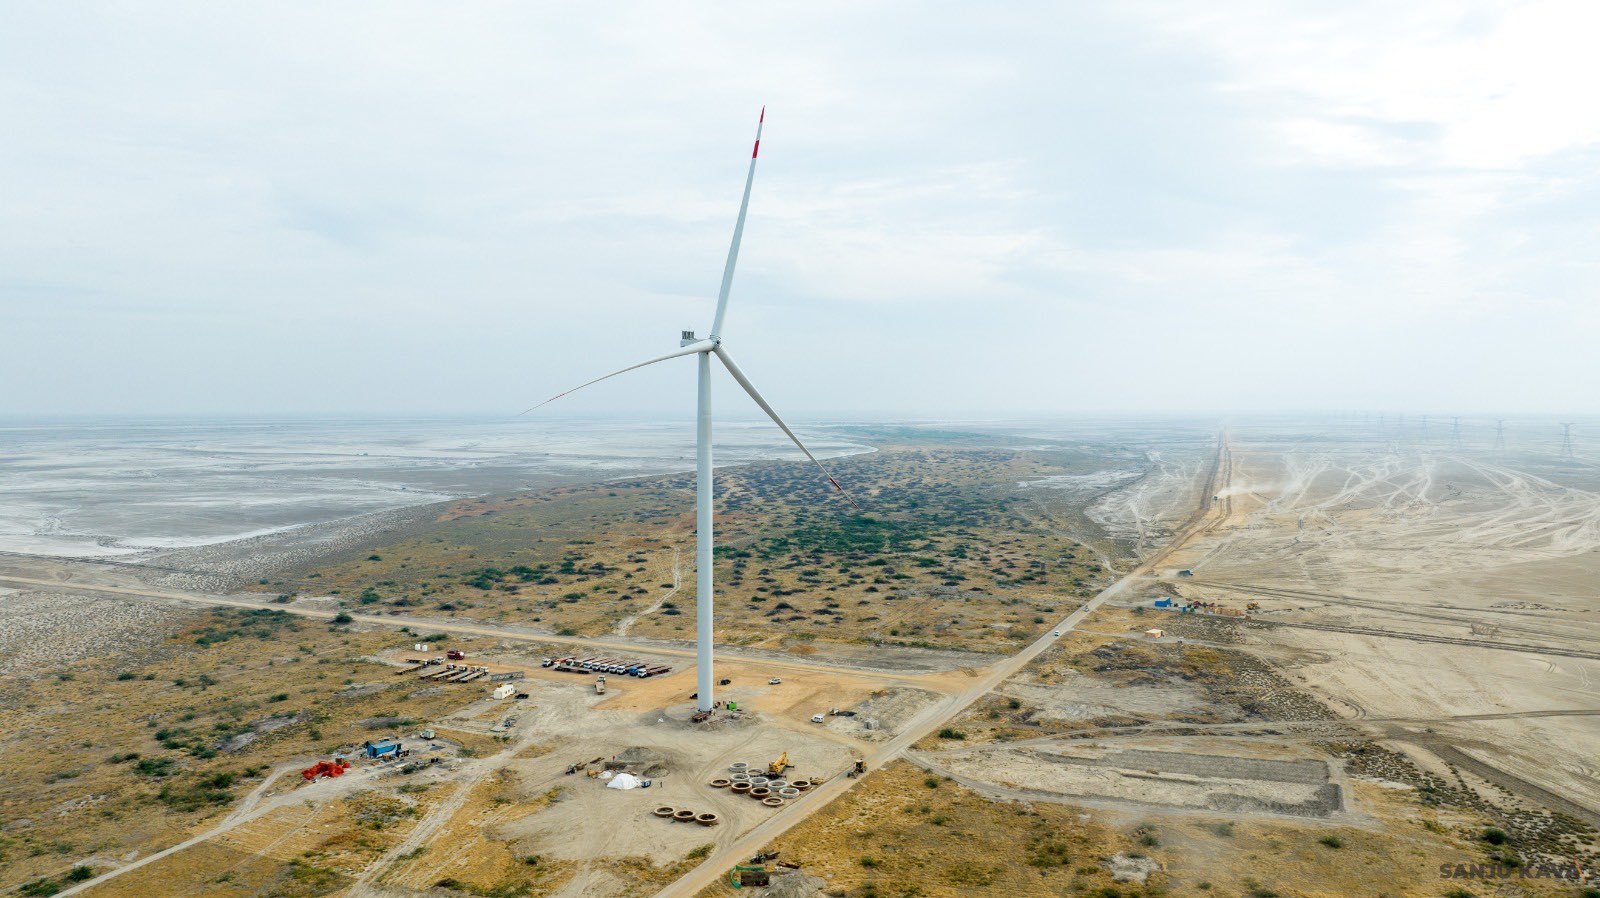 Adani Green’s wind power project raises environmental concerns in Sri Lanka